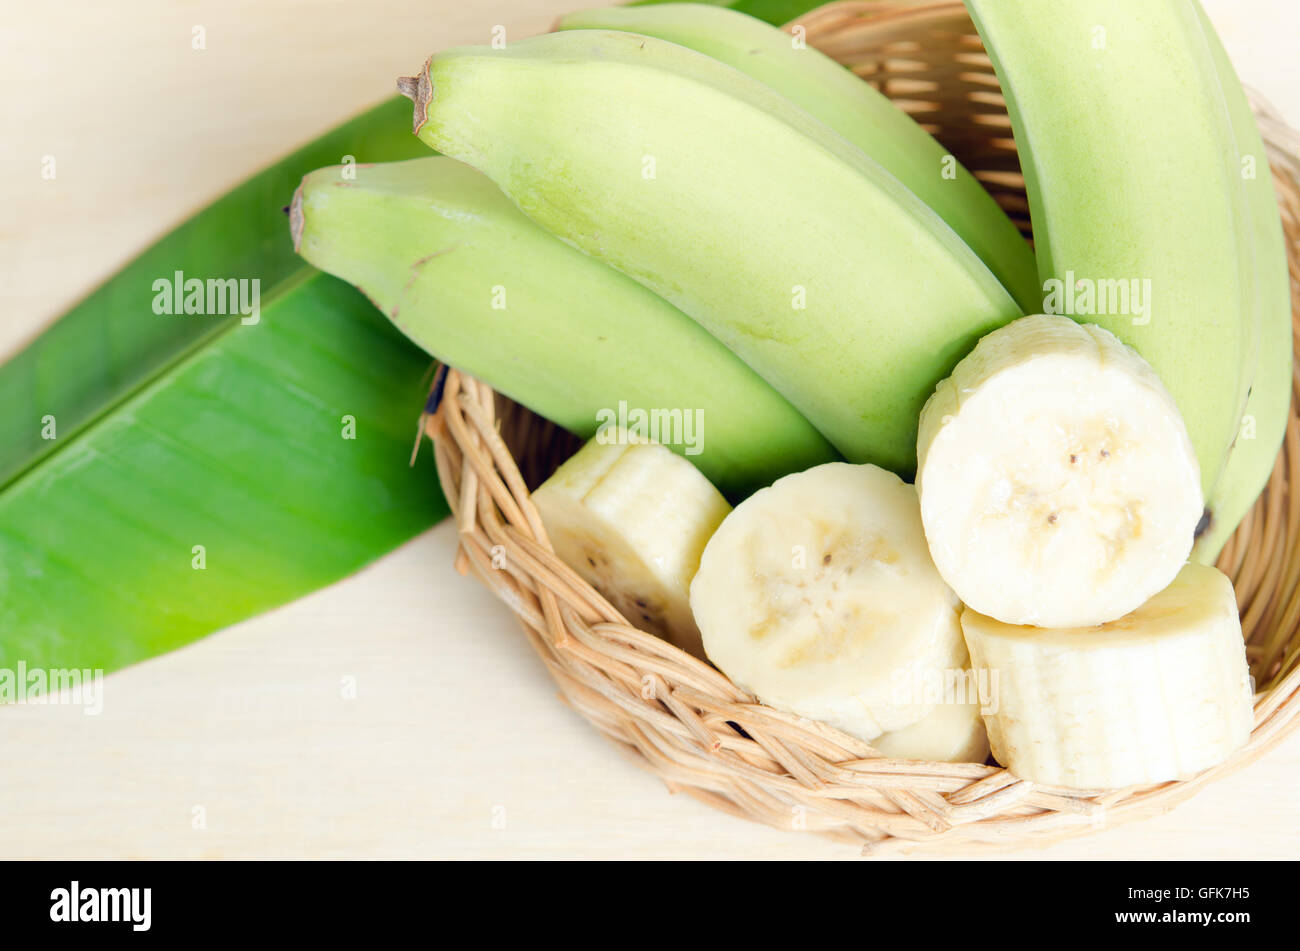 Banana (Other names are Musa banana acuminata, Musa balbisiana, and Musa x paradisiaca) fruit with leaf on basket Stock Photo